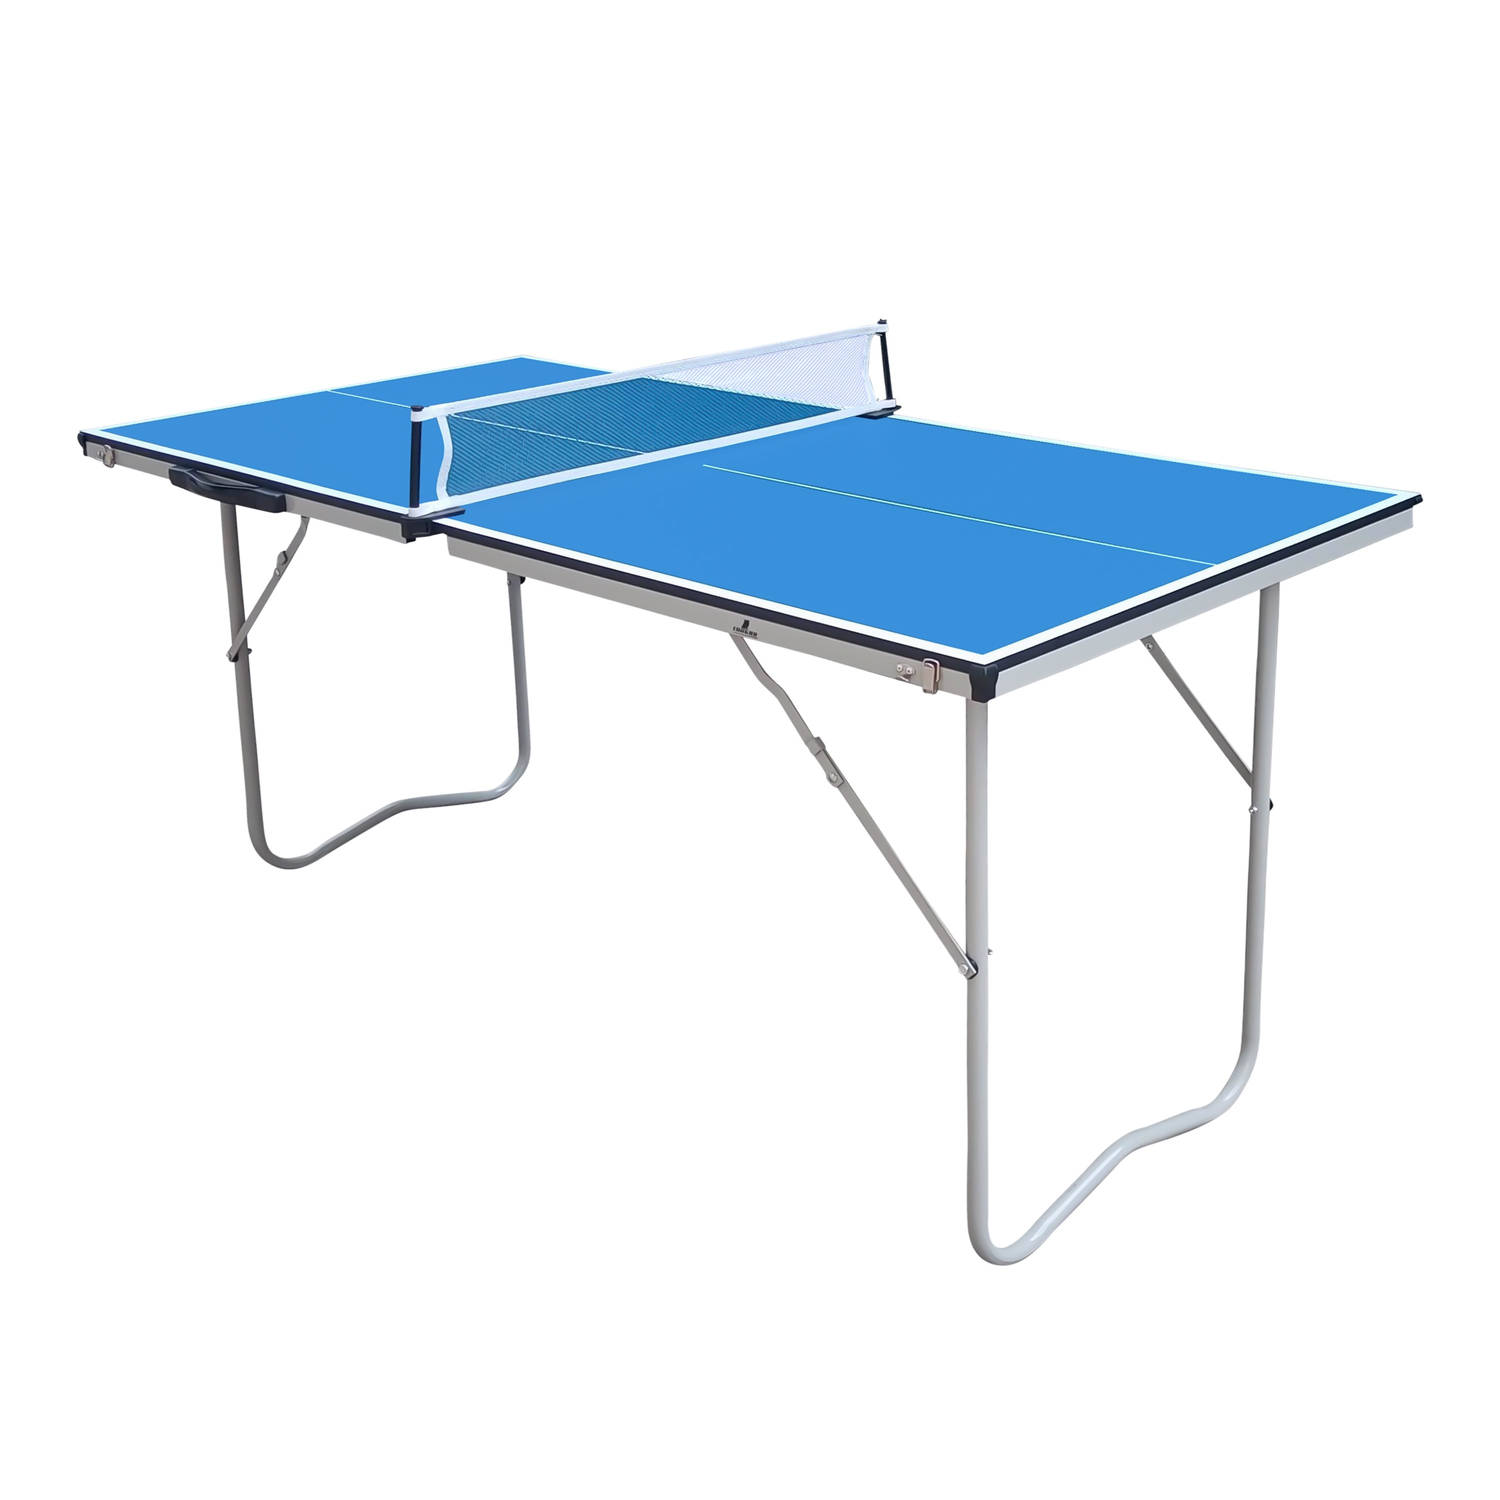 Cougar Tafeltennistafel Mini 1500 Basic inklapbaar in blauw Indoor inklapbare & draagbare tafeltenni